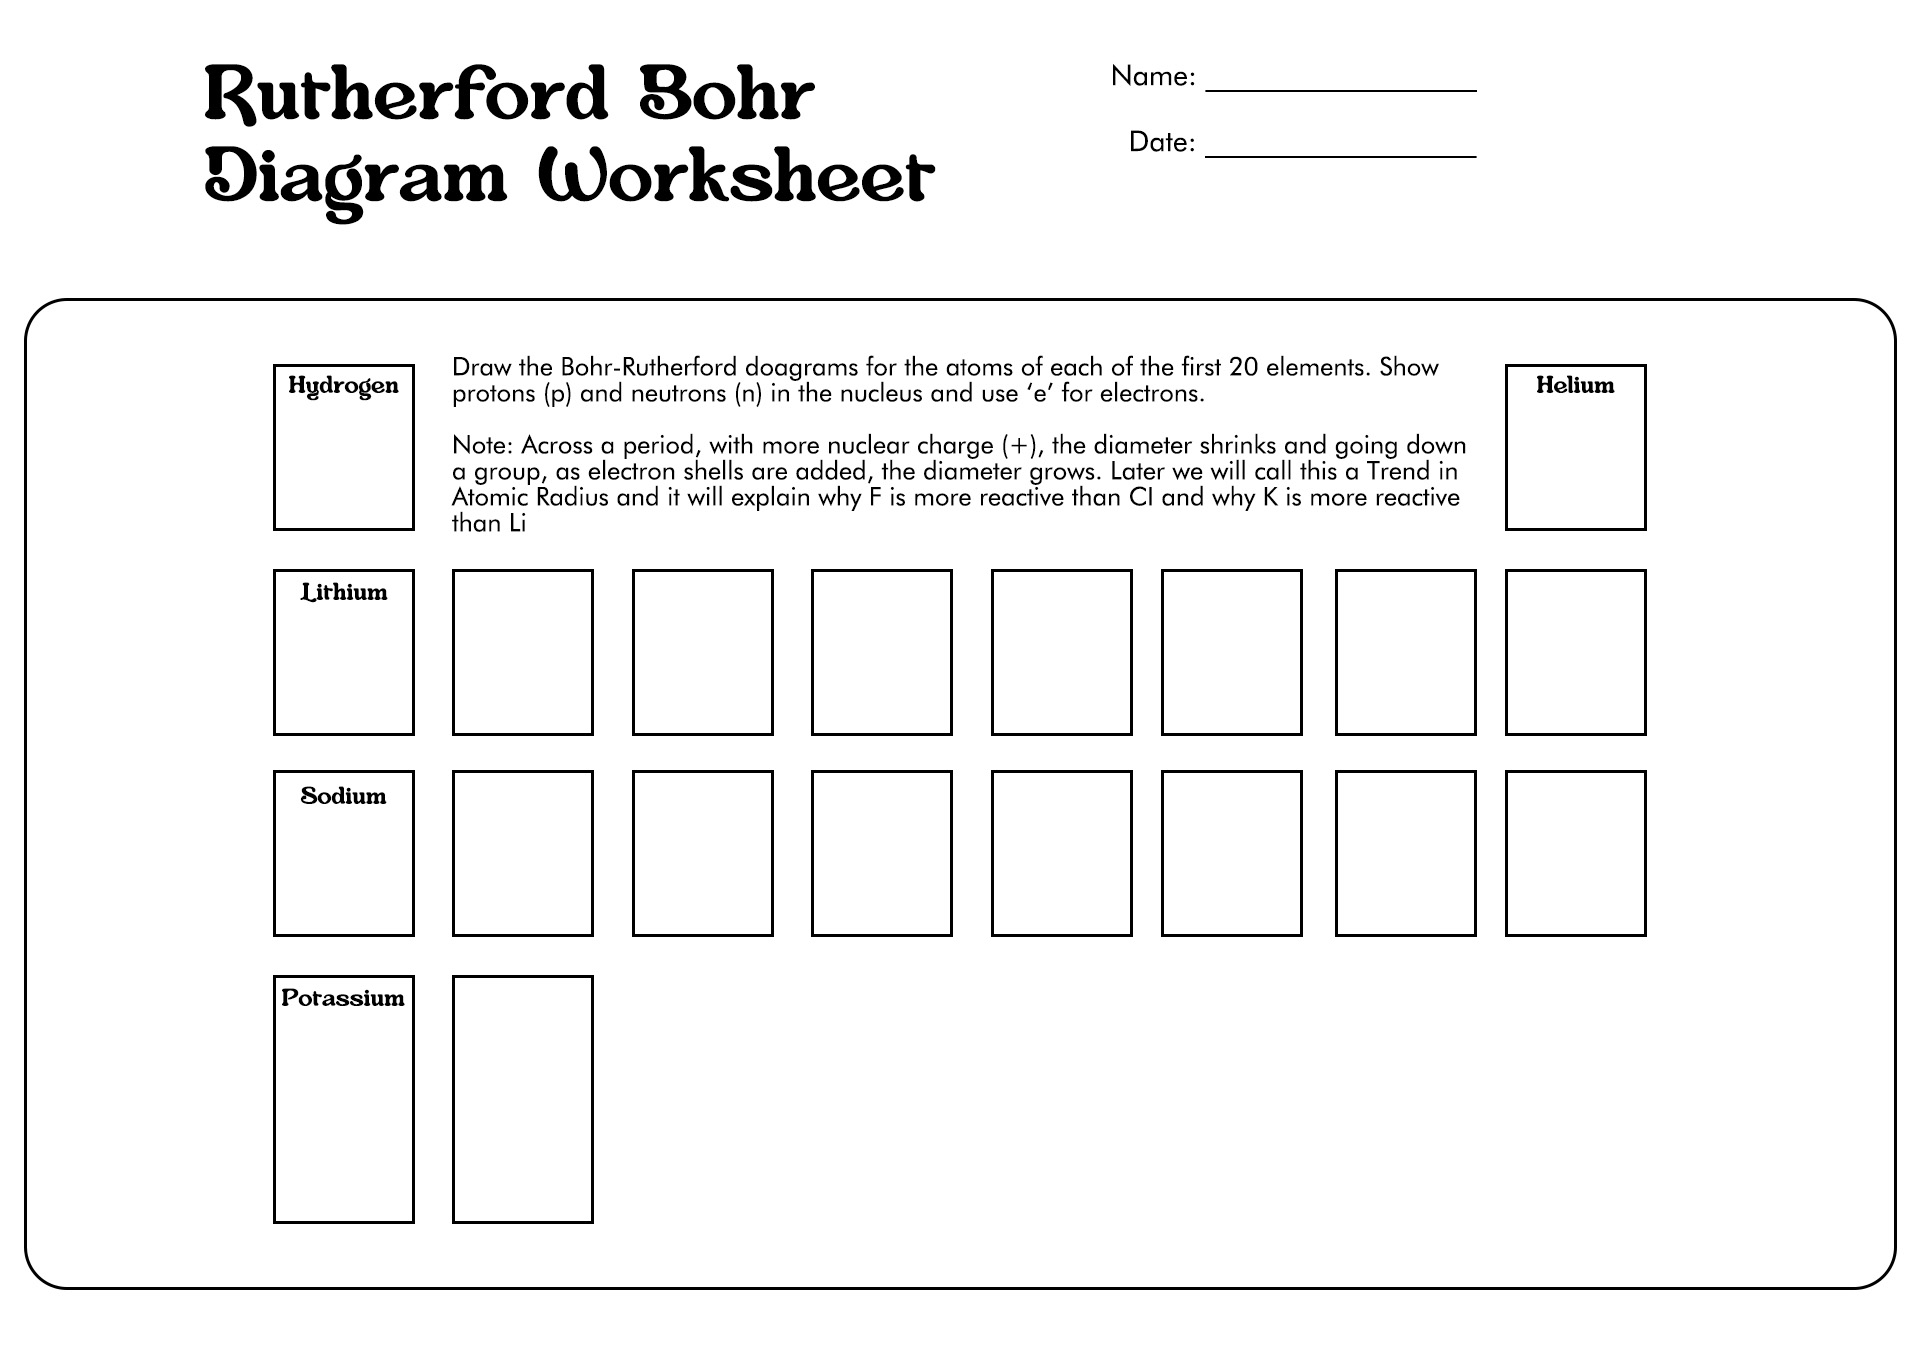 Rutherford-Bohr Diagram Worksheet Image